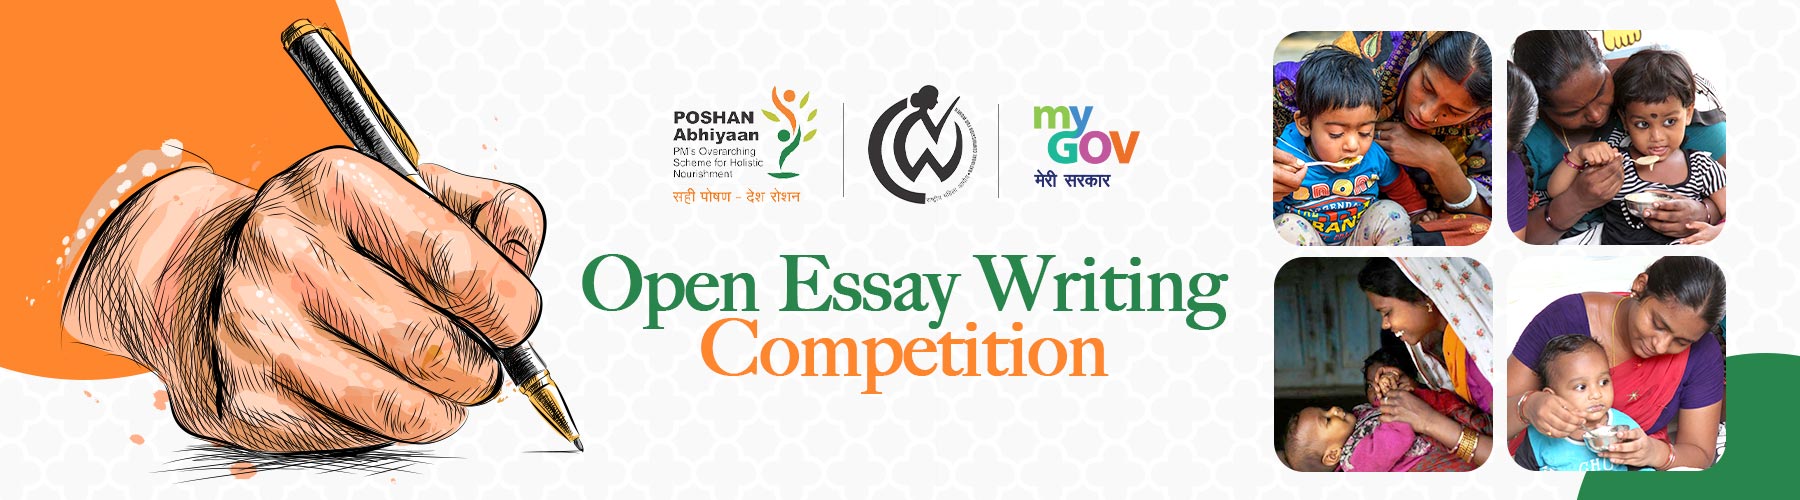 Poshan Maah Open Essay Writing Competition